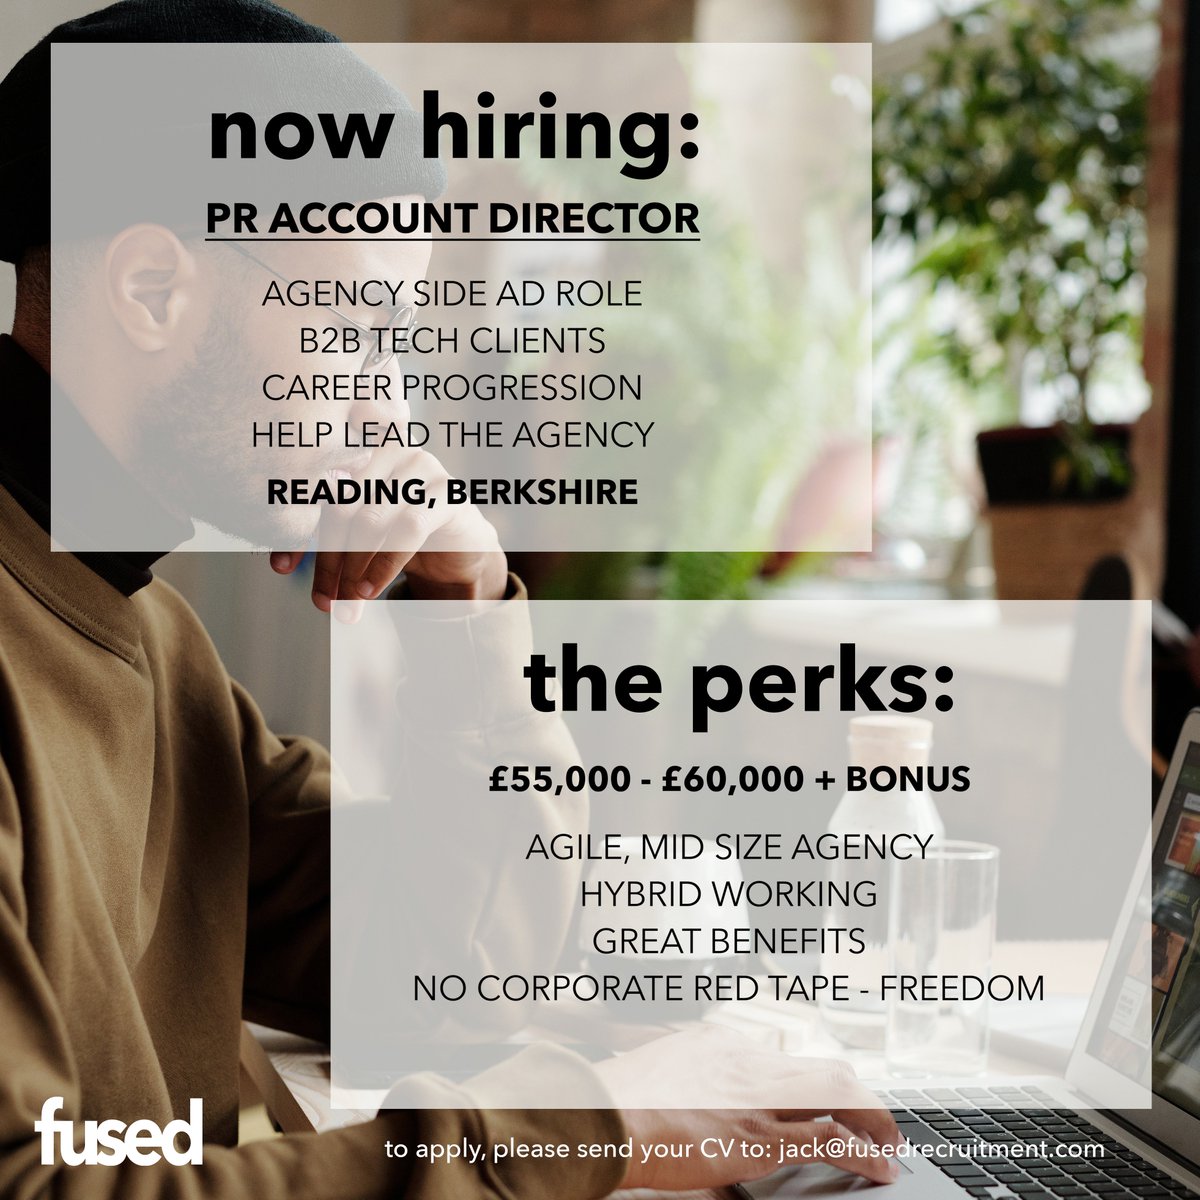 NEW OPPORTUNITY: PR Account Director - B2B Tech PR - Reading, Berkshire. #prjobs #hiring #techpr #prcareers #prweek #prnews